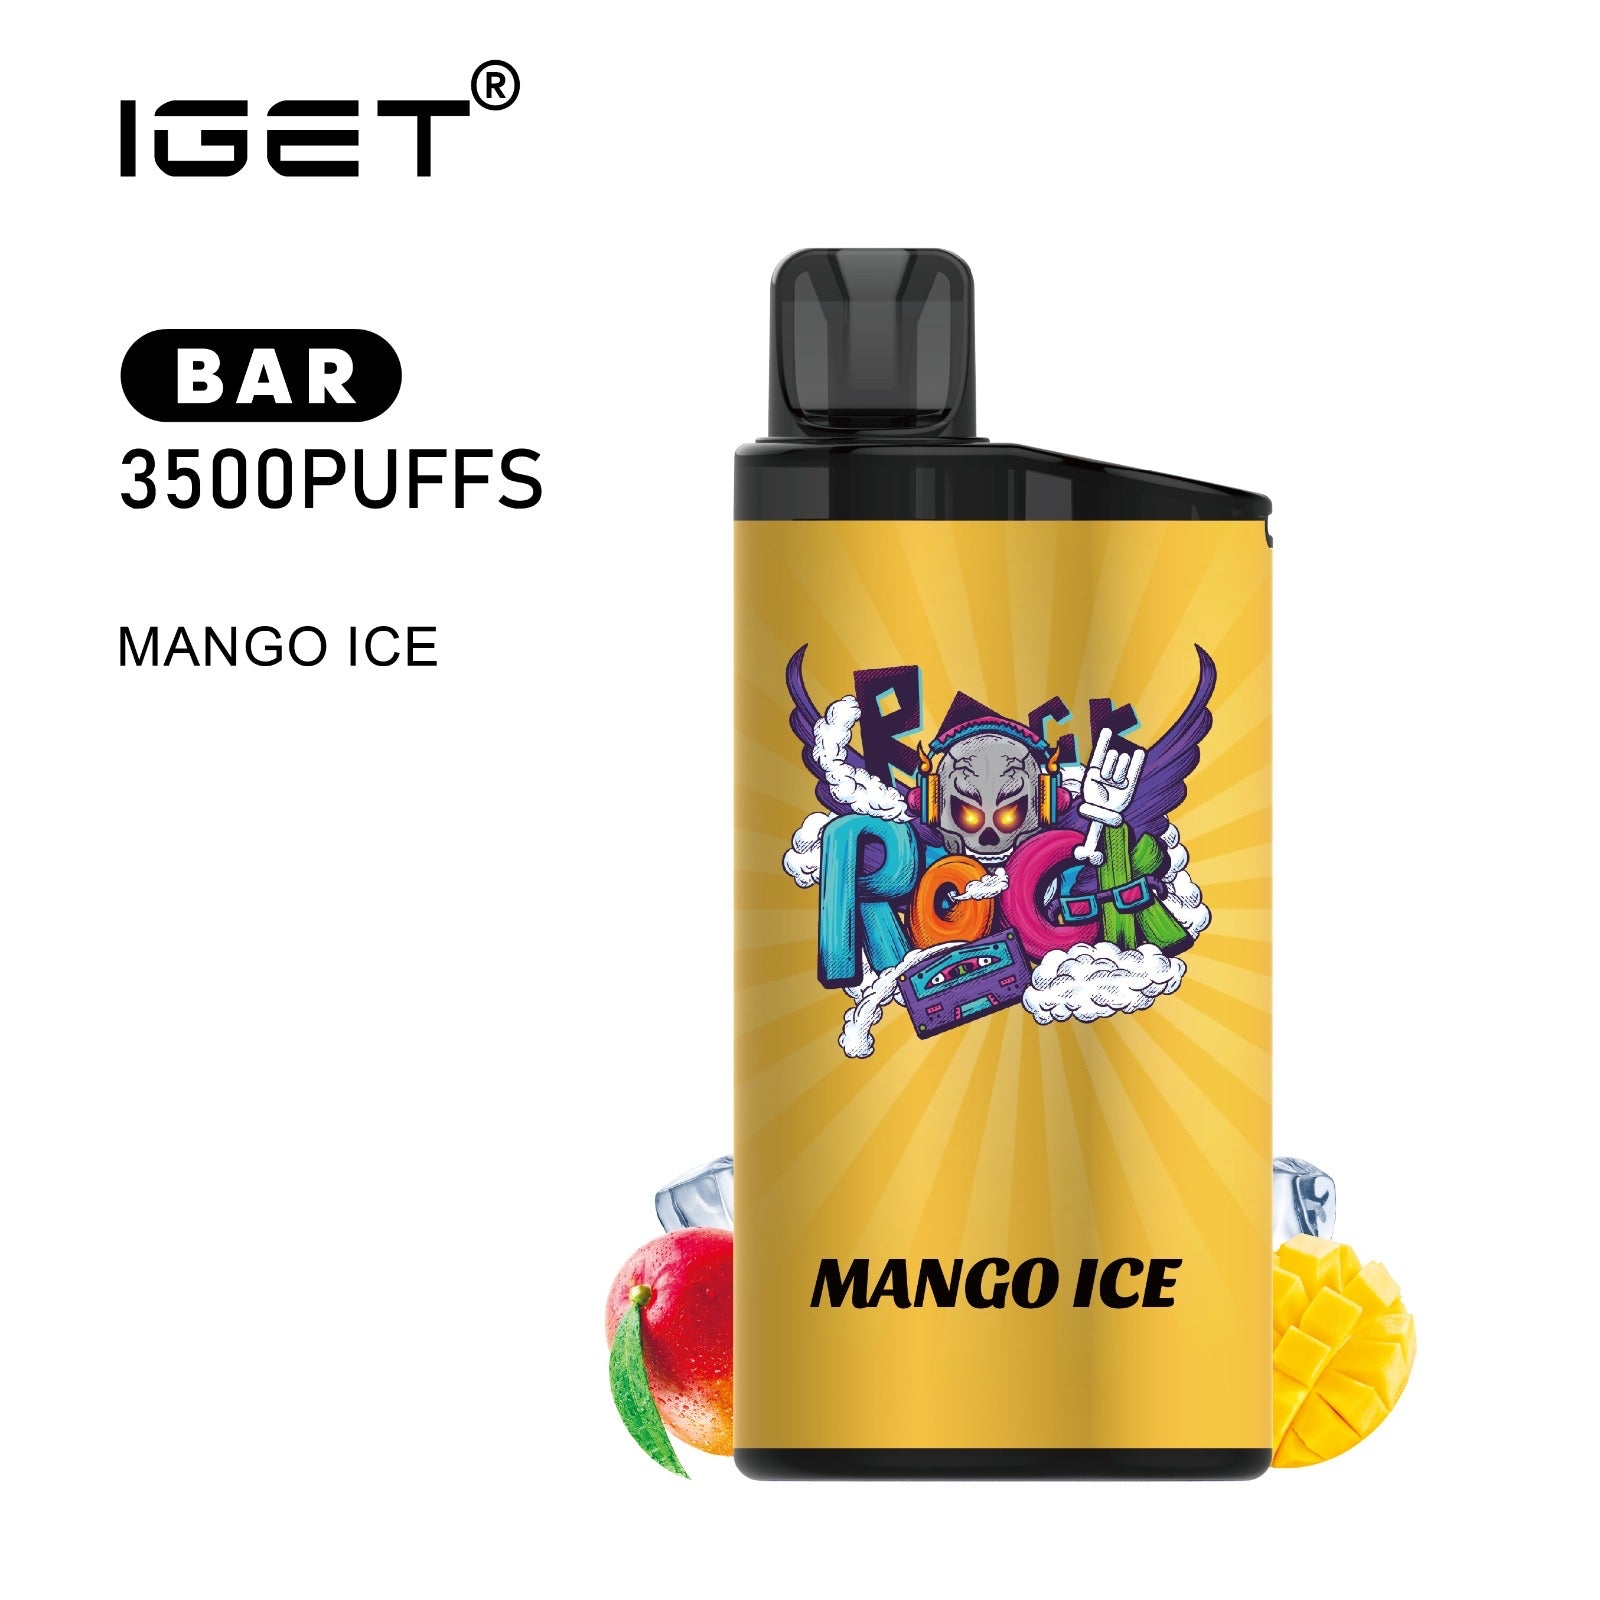 IGET BAR MANGO ICE 3500 PUFFS